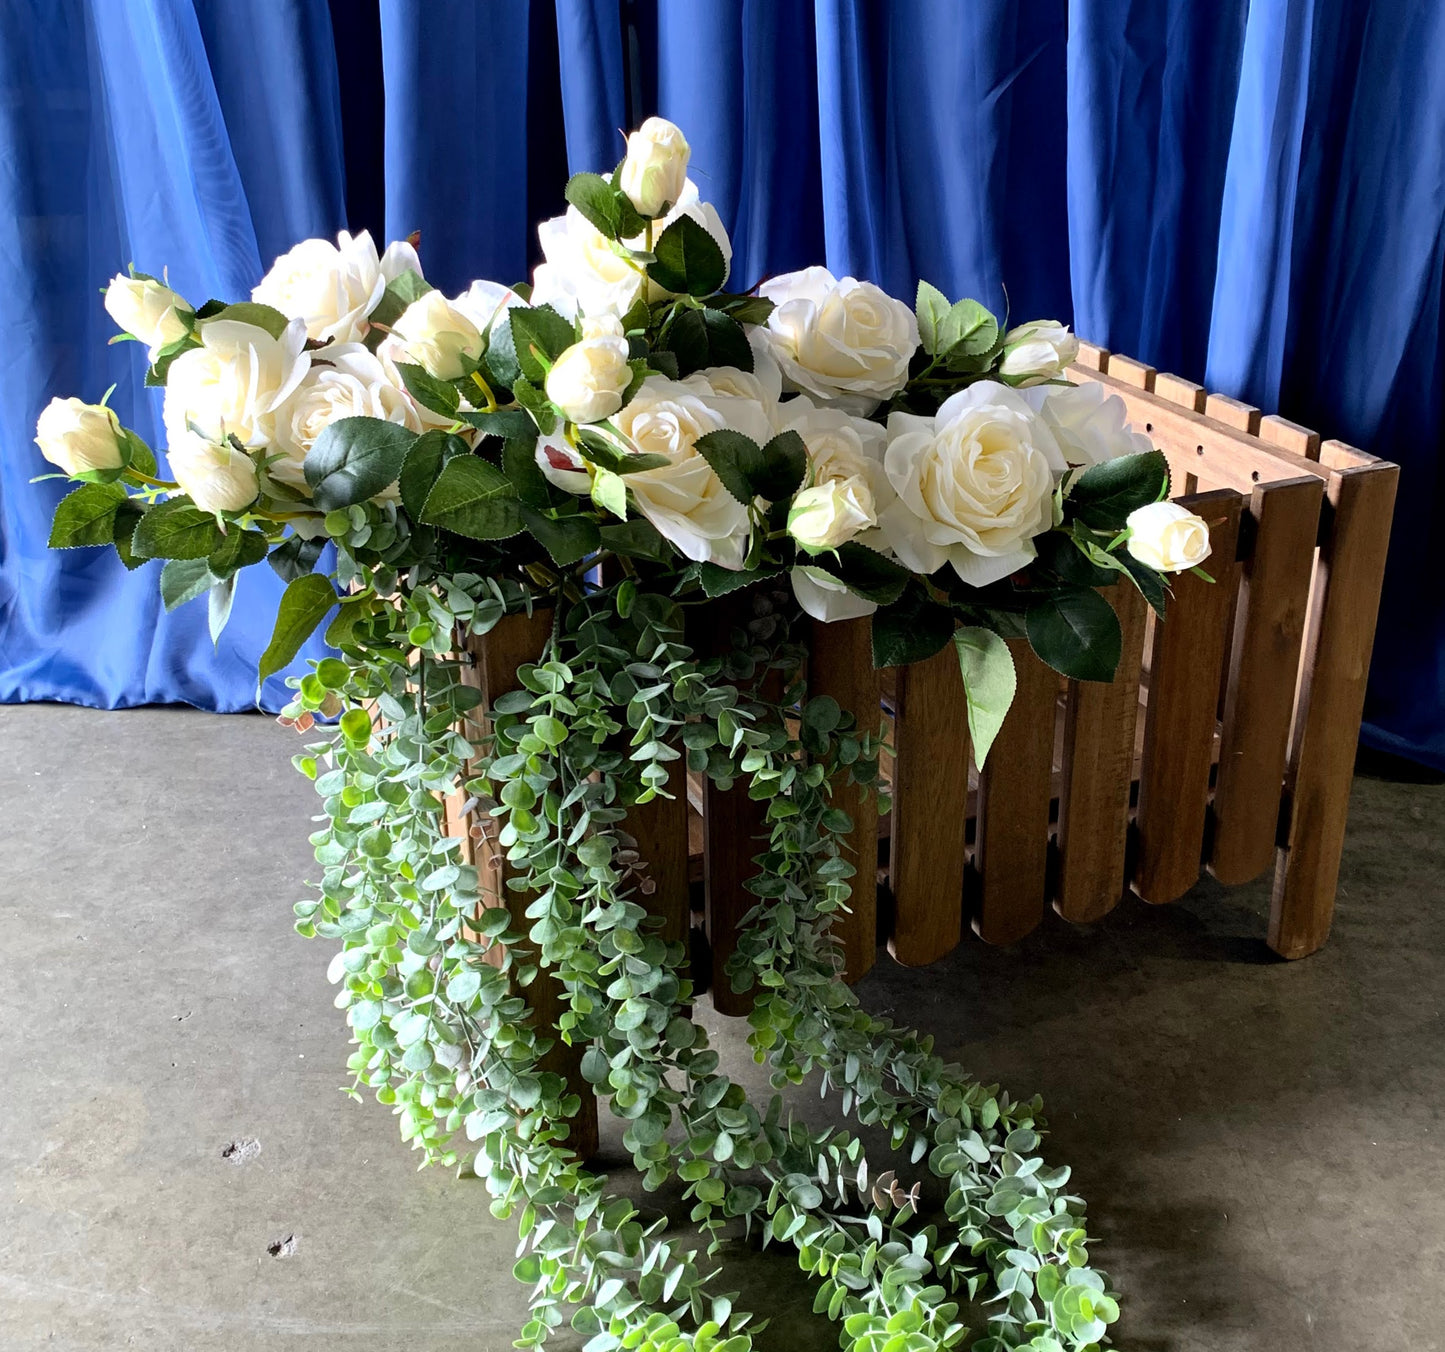 White roses in wooden planter.